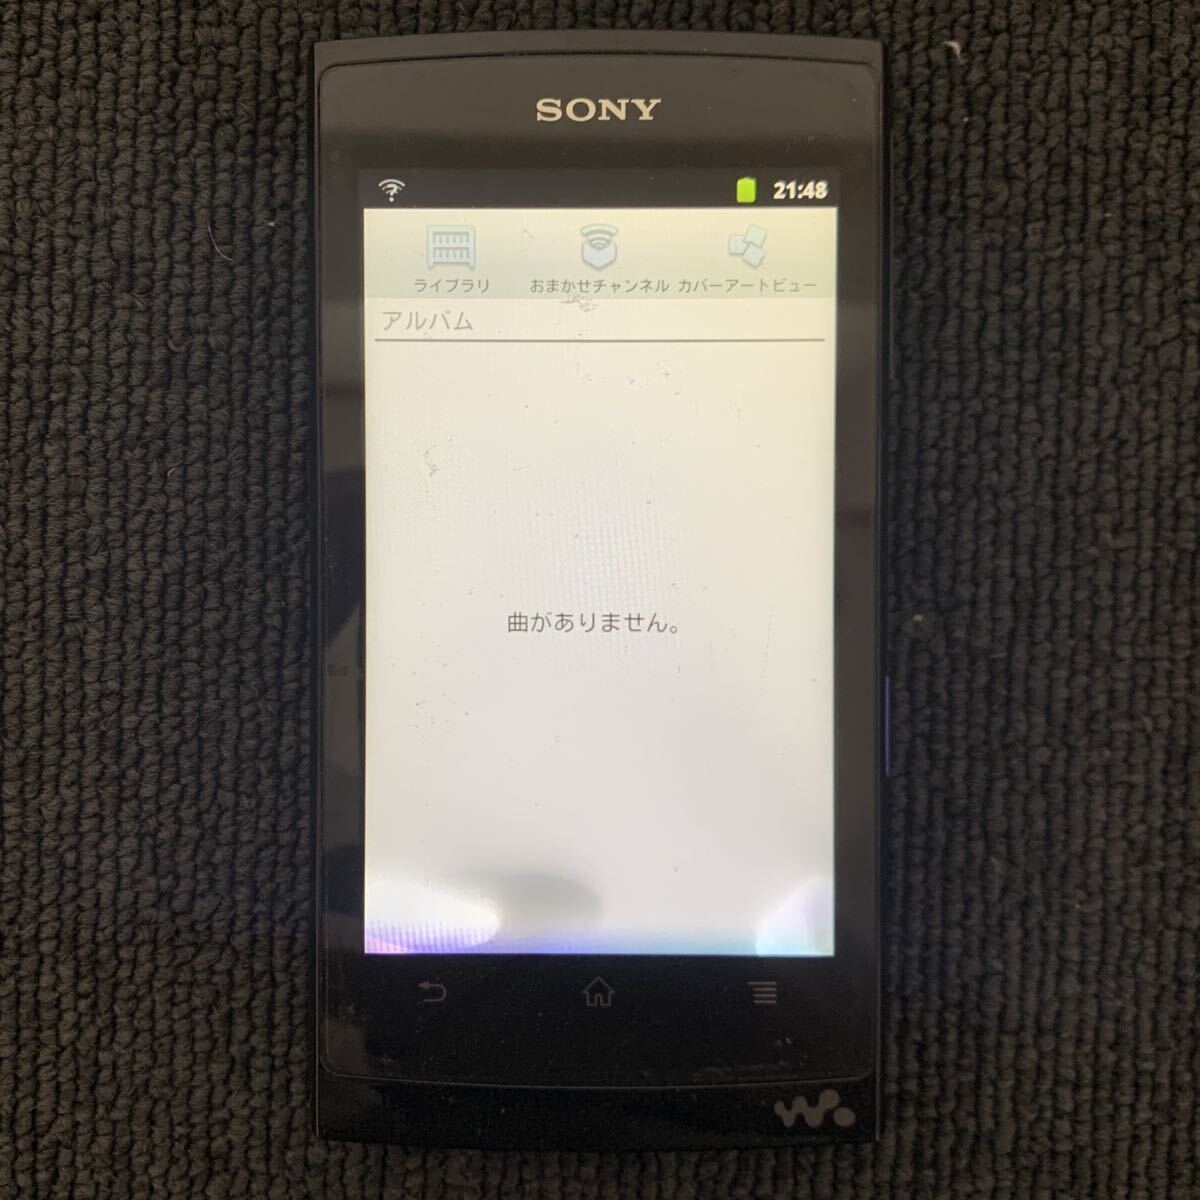 SONY WALKMAN NW-Z1060 ソニー ウォークマン 32GB Zシリーズ の画像1